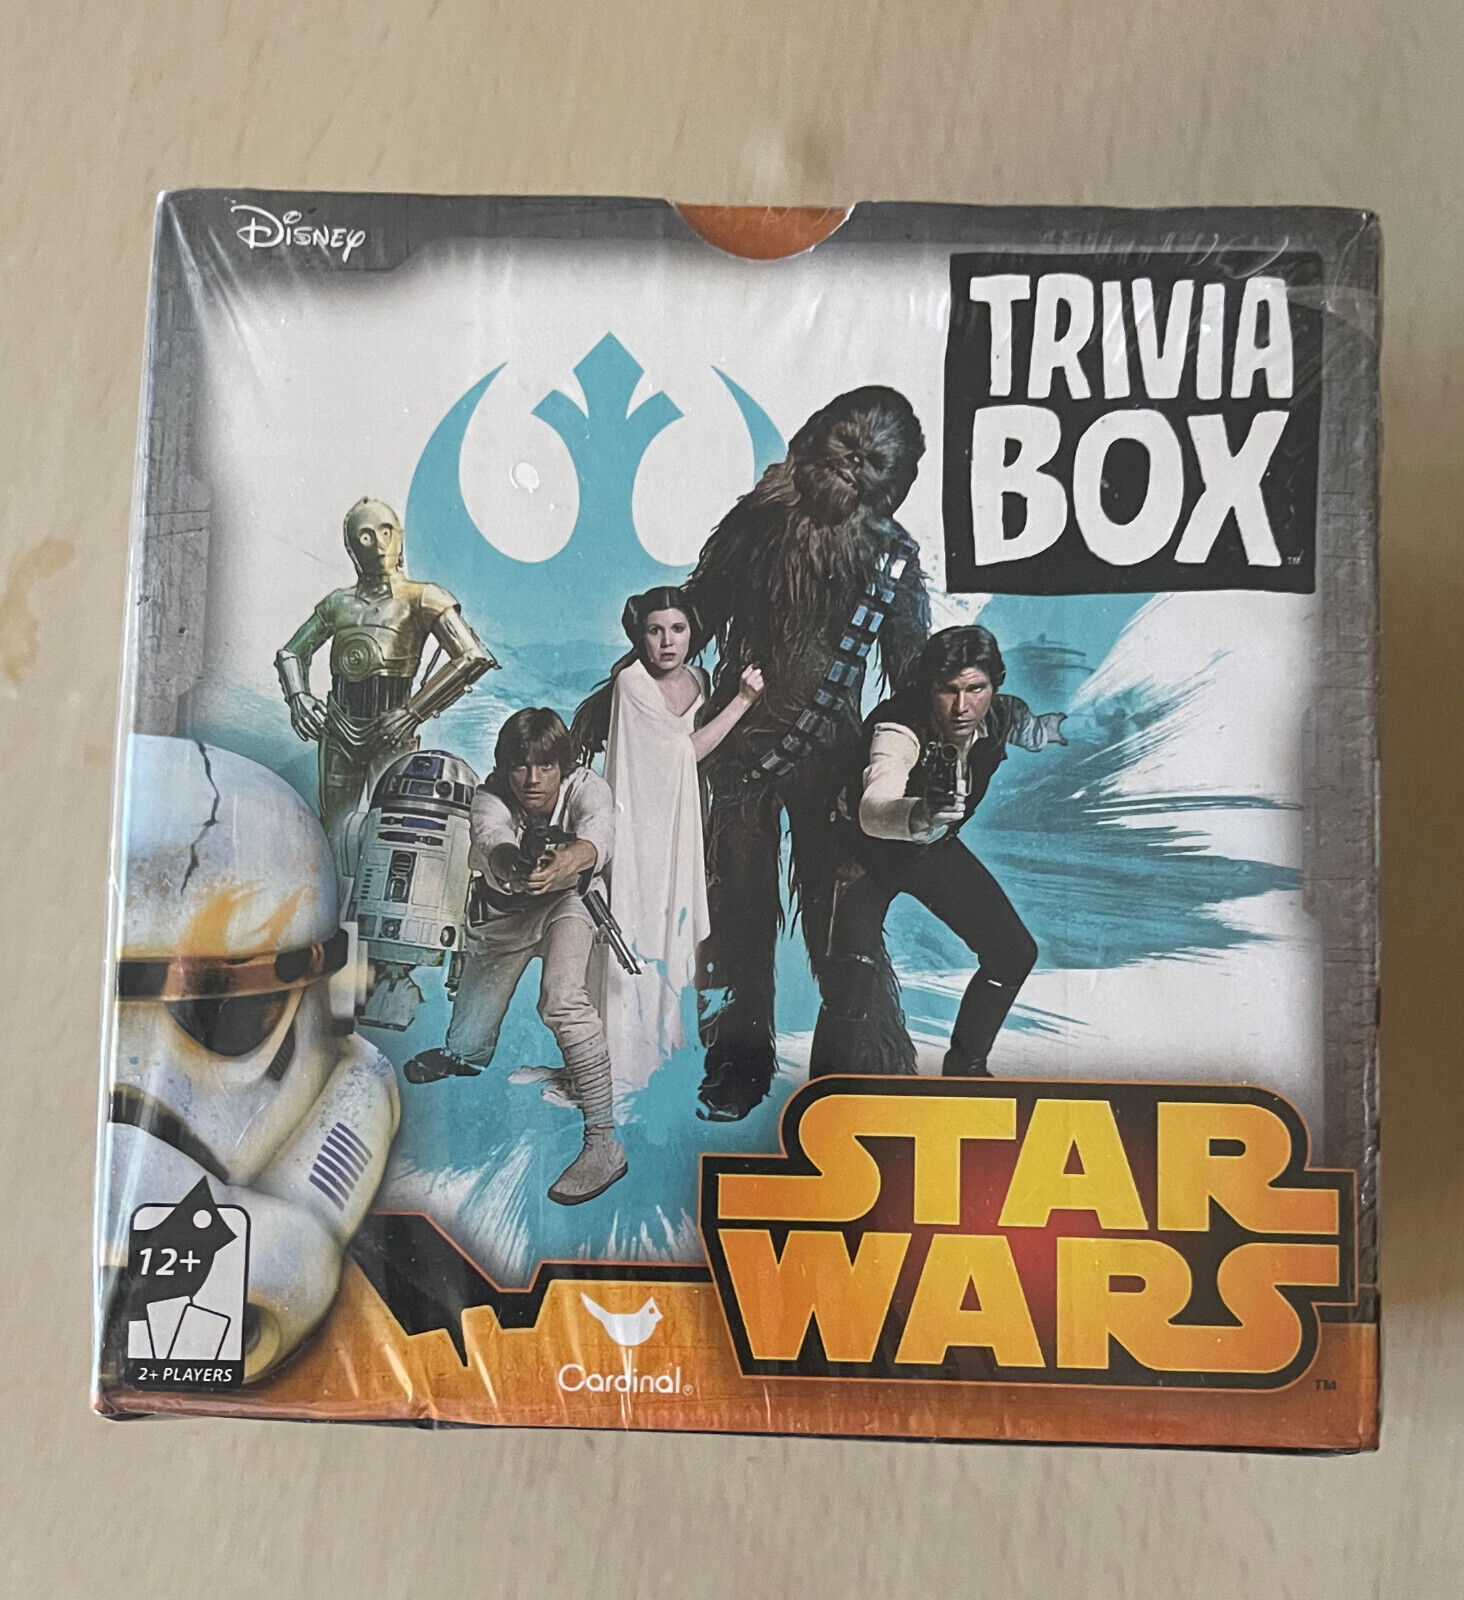 Disney Star Wars Trivia Box - Cardinal - NEW - Buy It Now